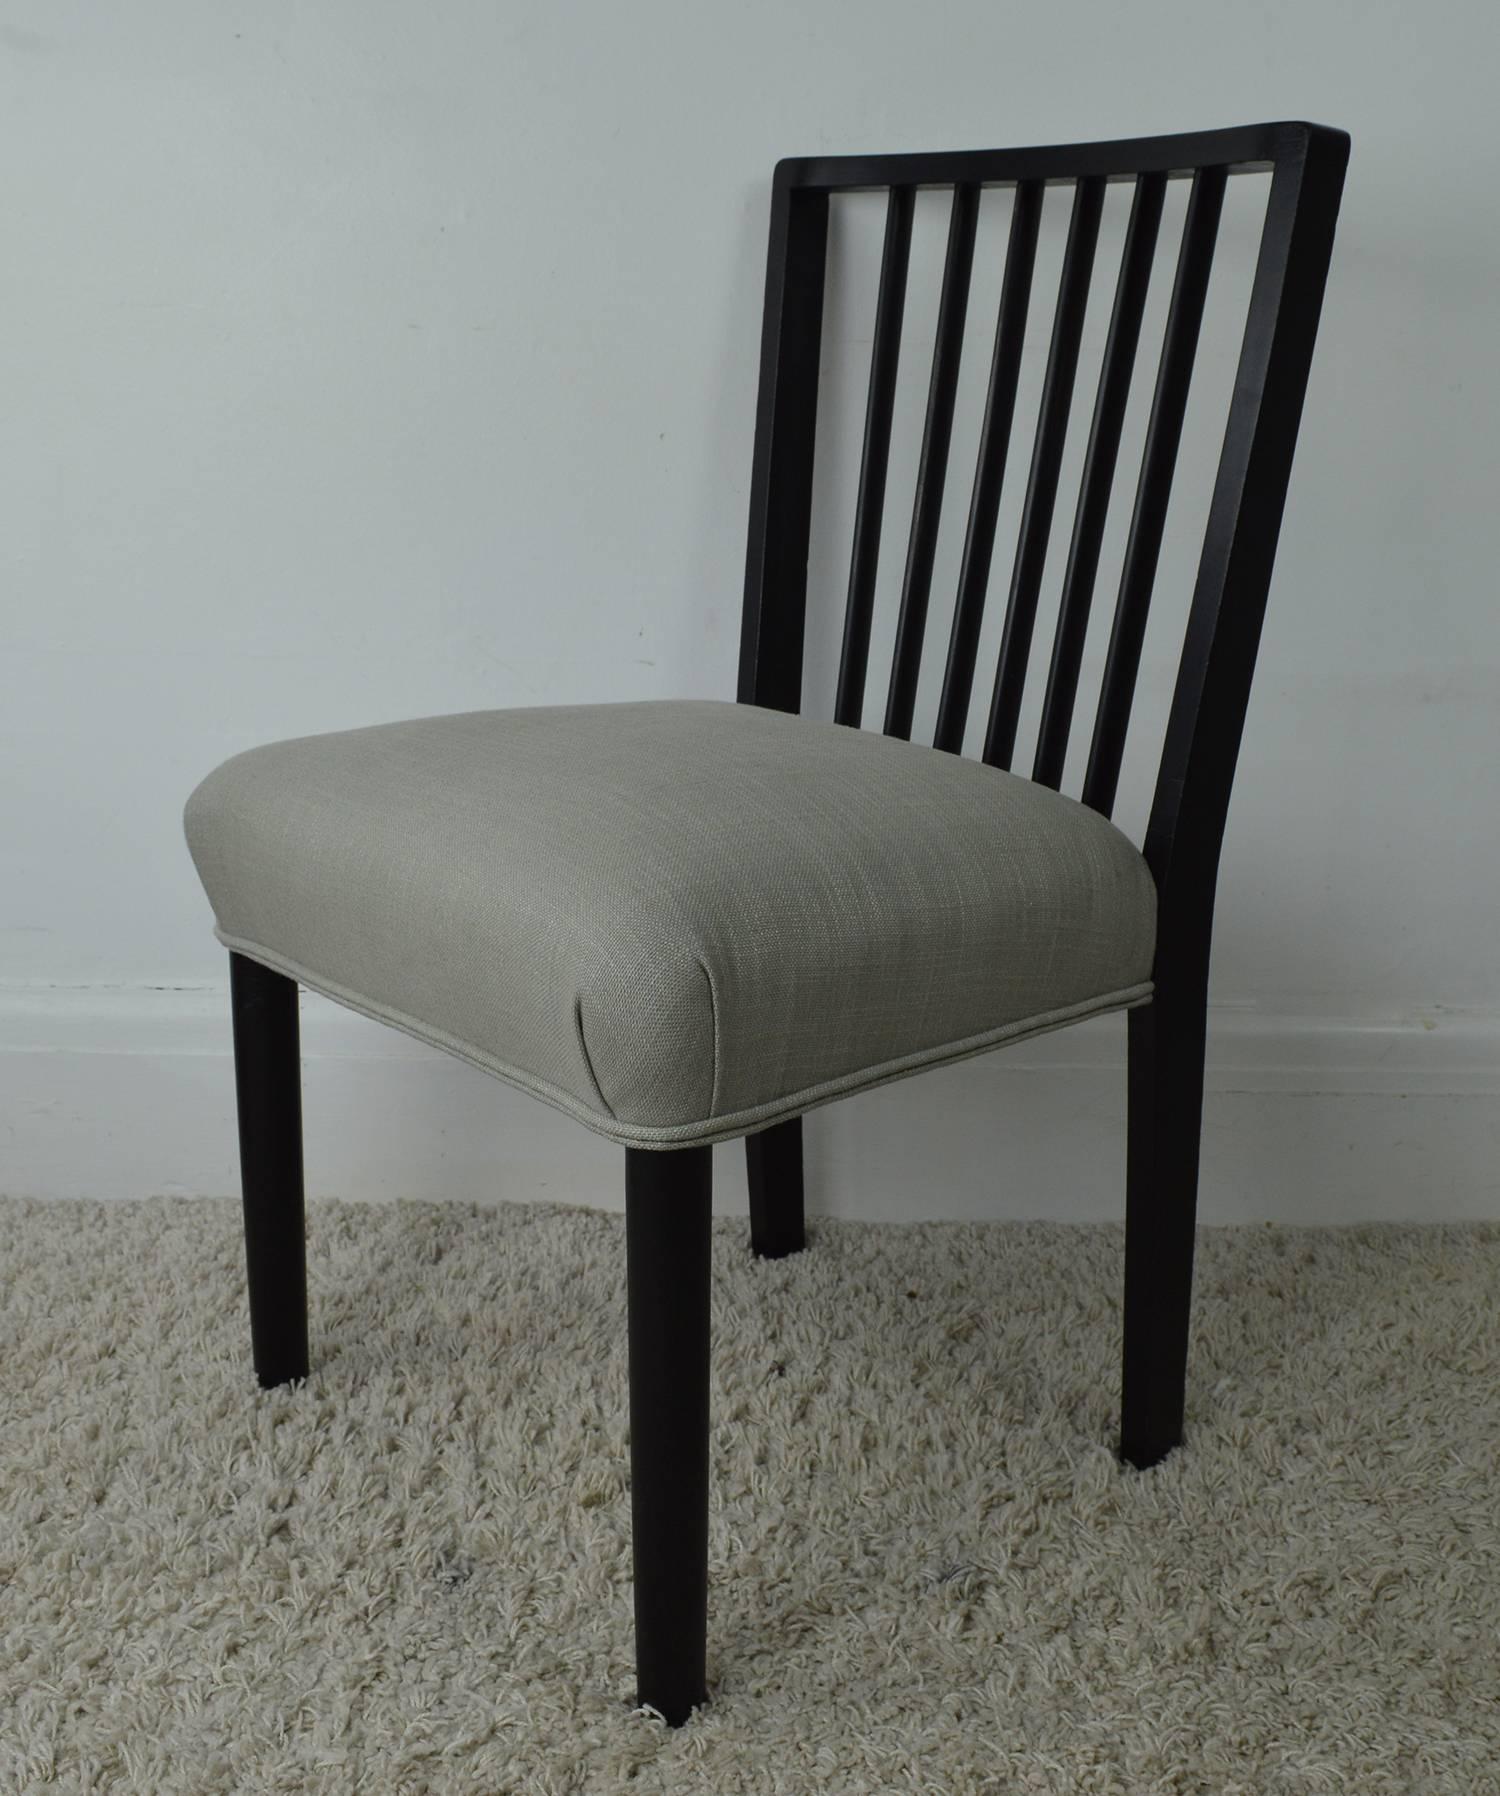 English Mid-Century Ebonized Spindle Back Side Chair. ( One left )